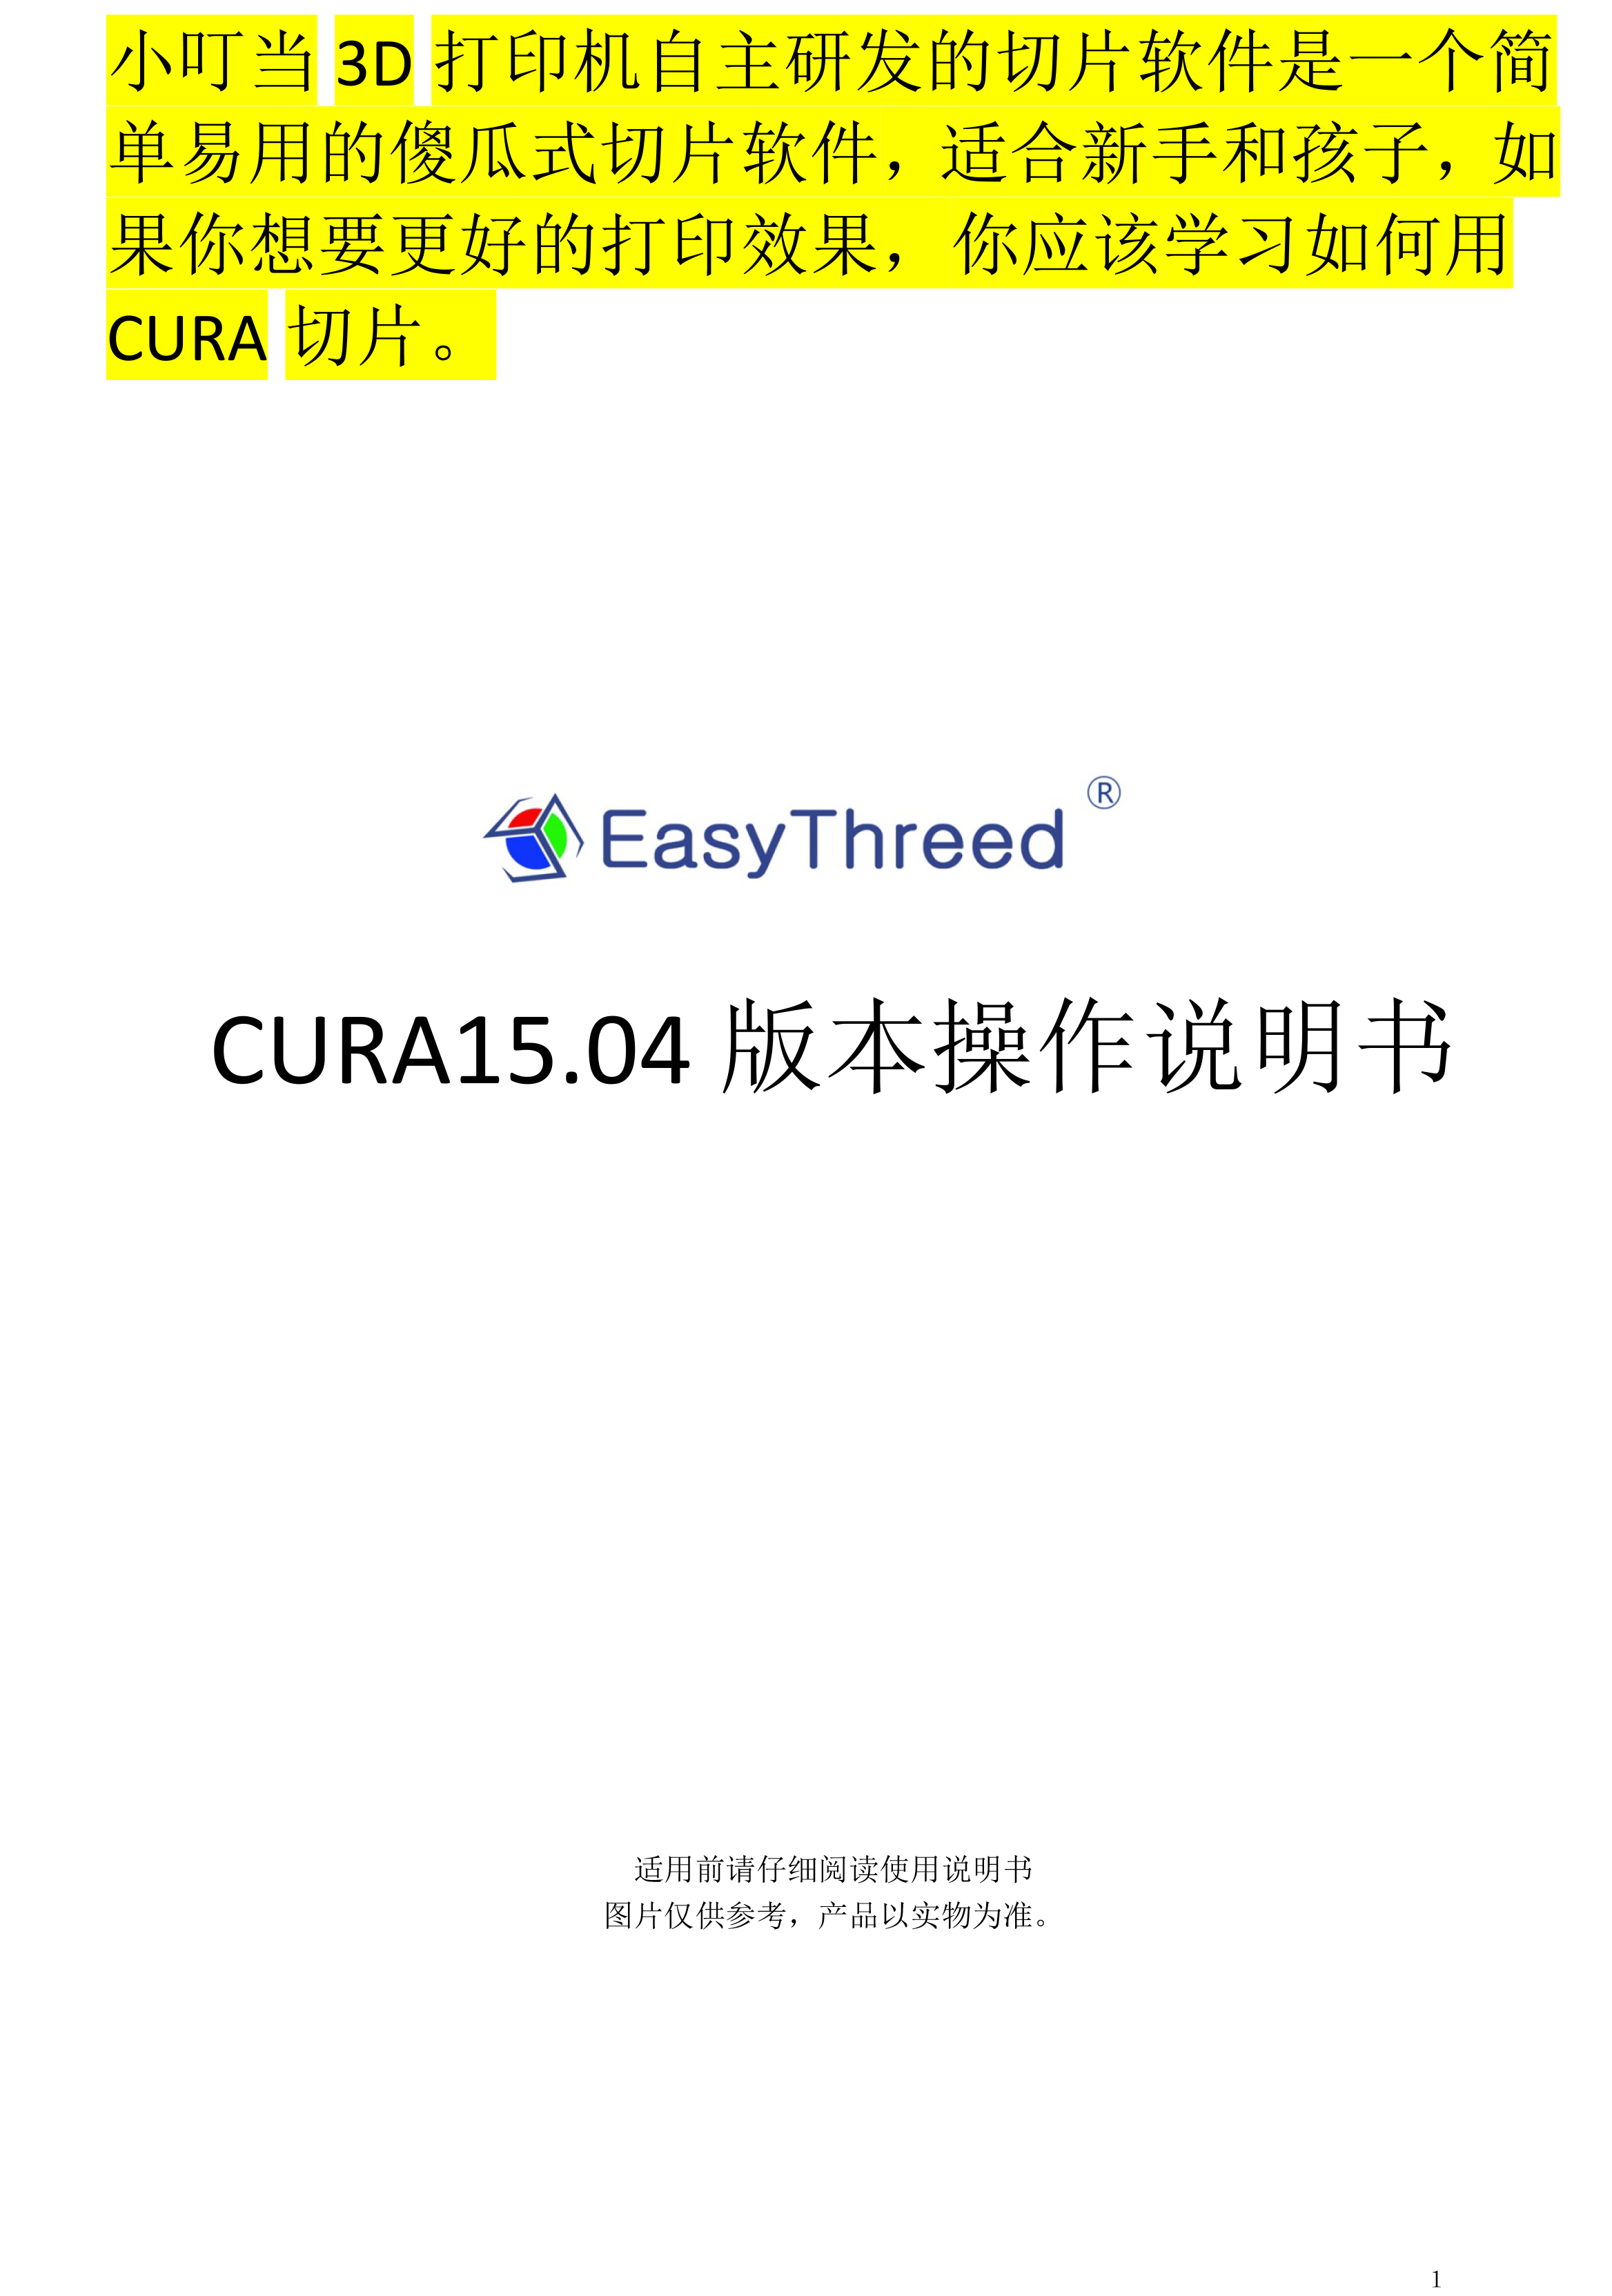 CURA 15.04版本 使用说明书